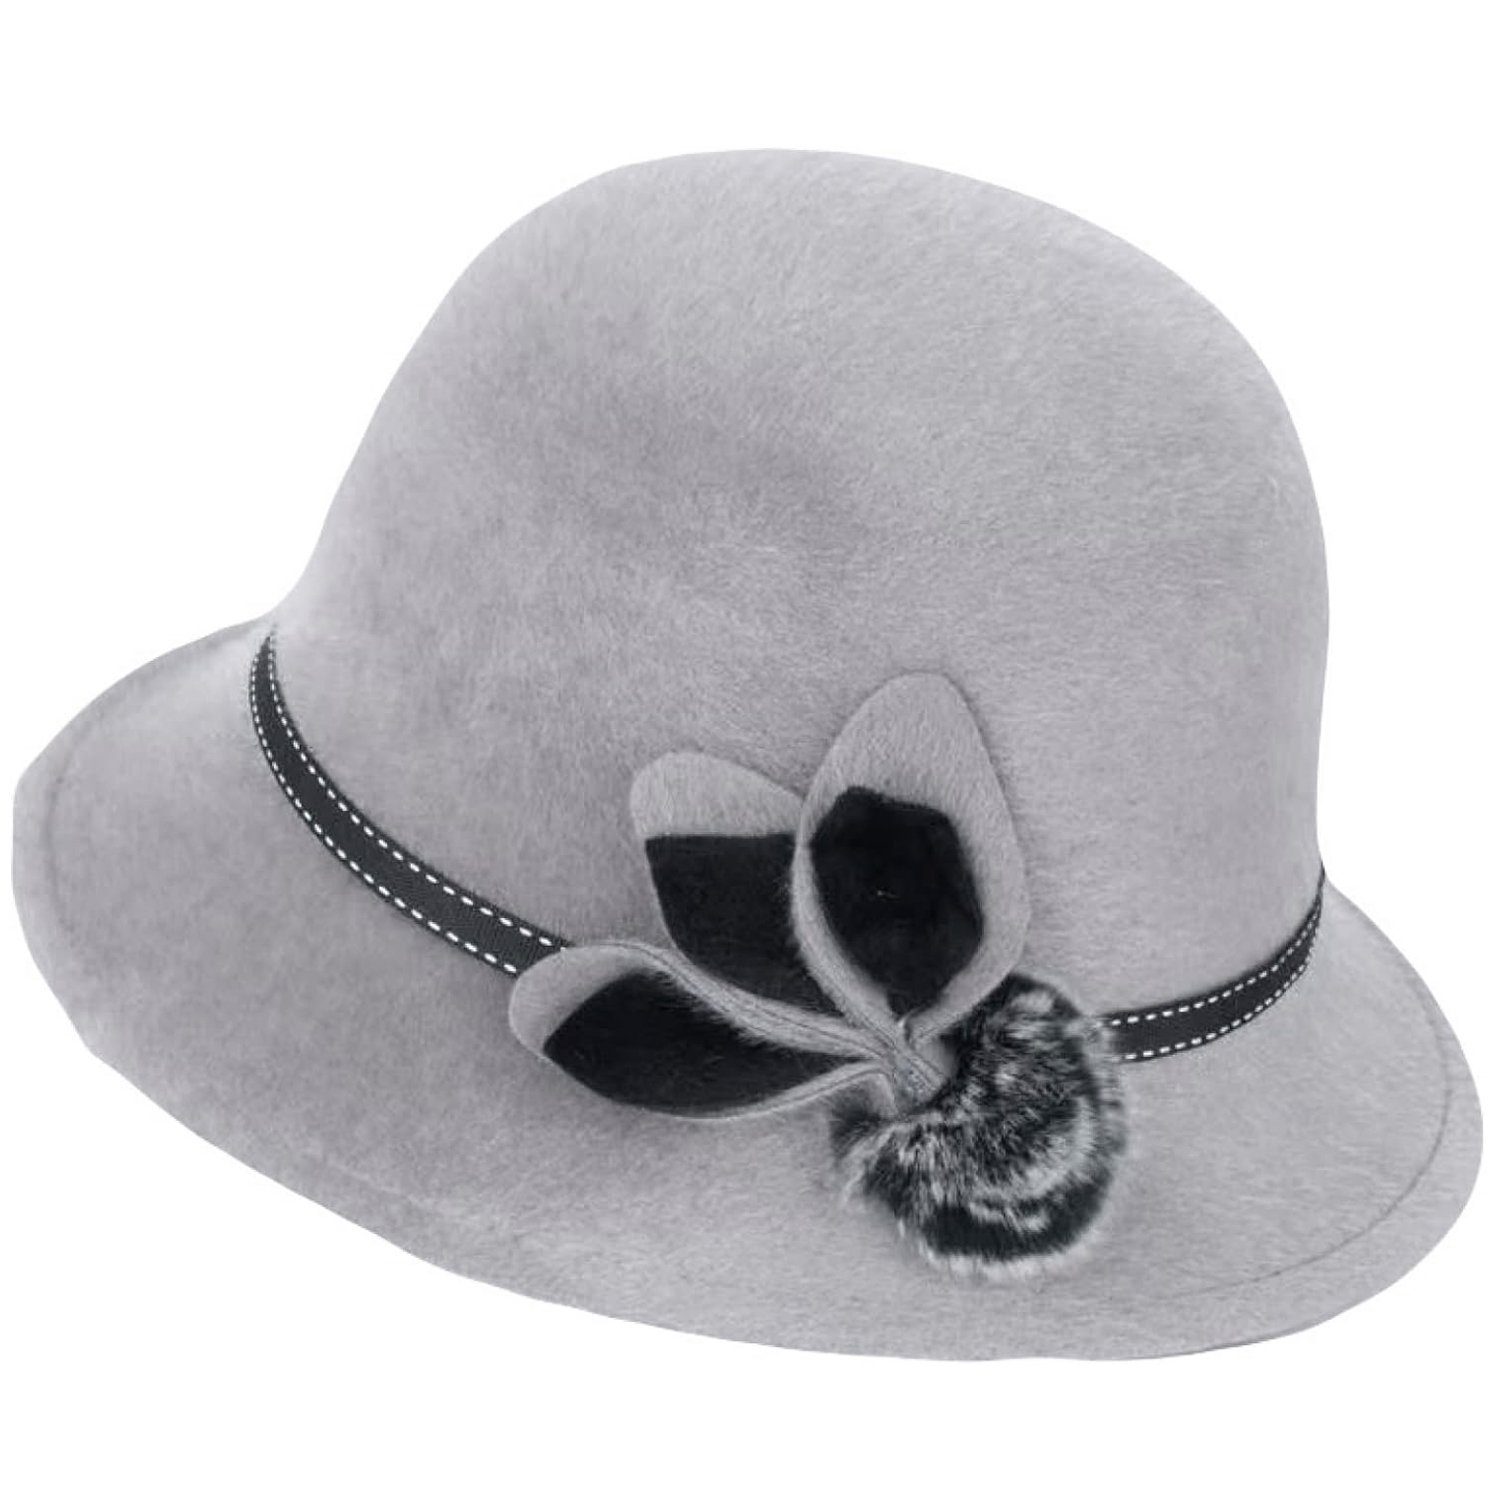 MAGICSHE Filzhut Wollfilz Fedora Hut Vintage elegante Damen Fischerhüte grau